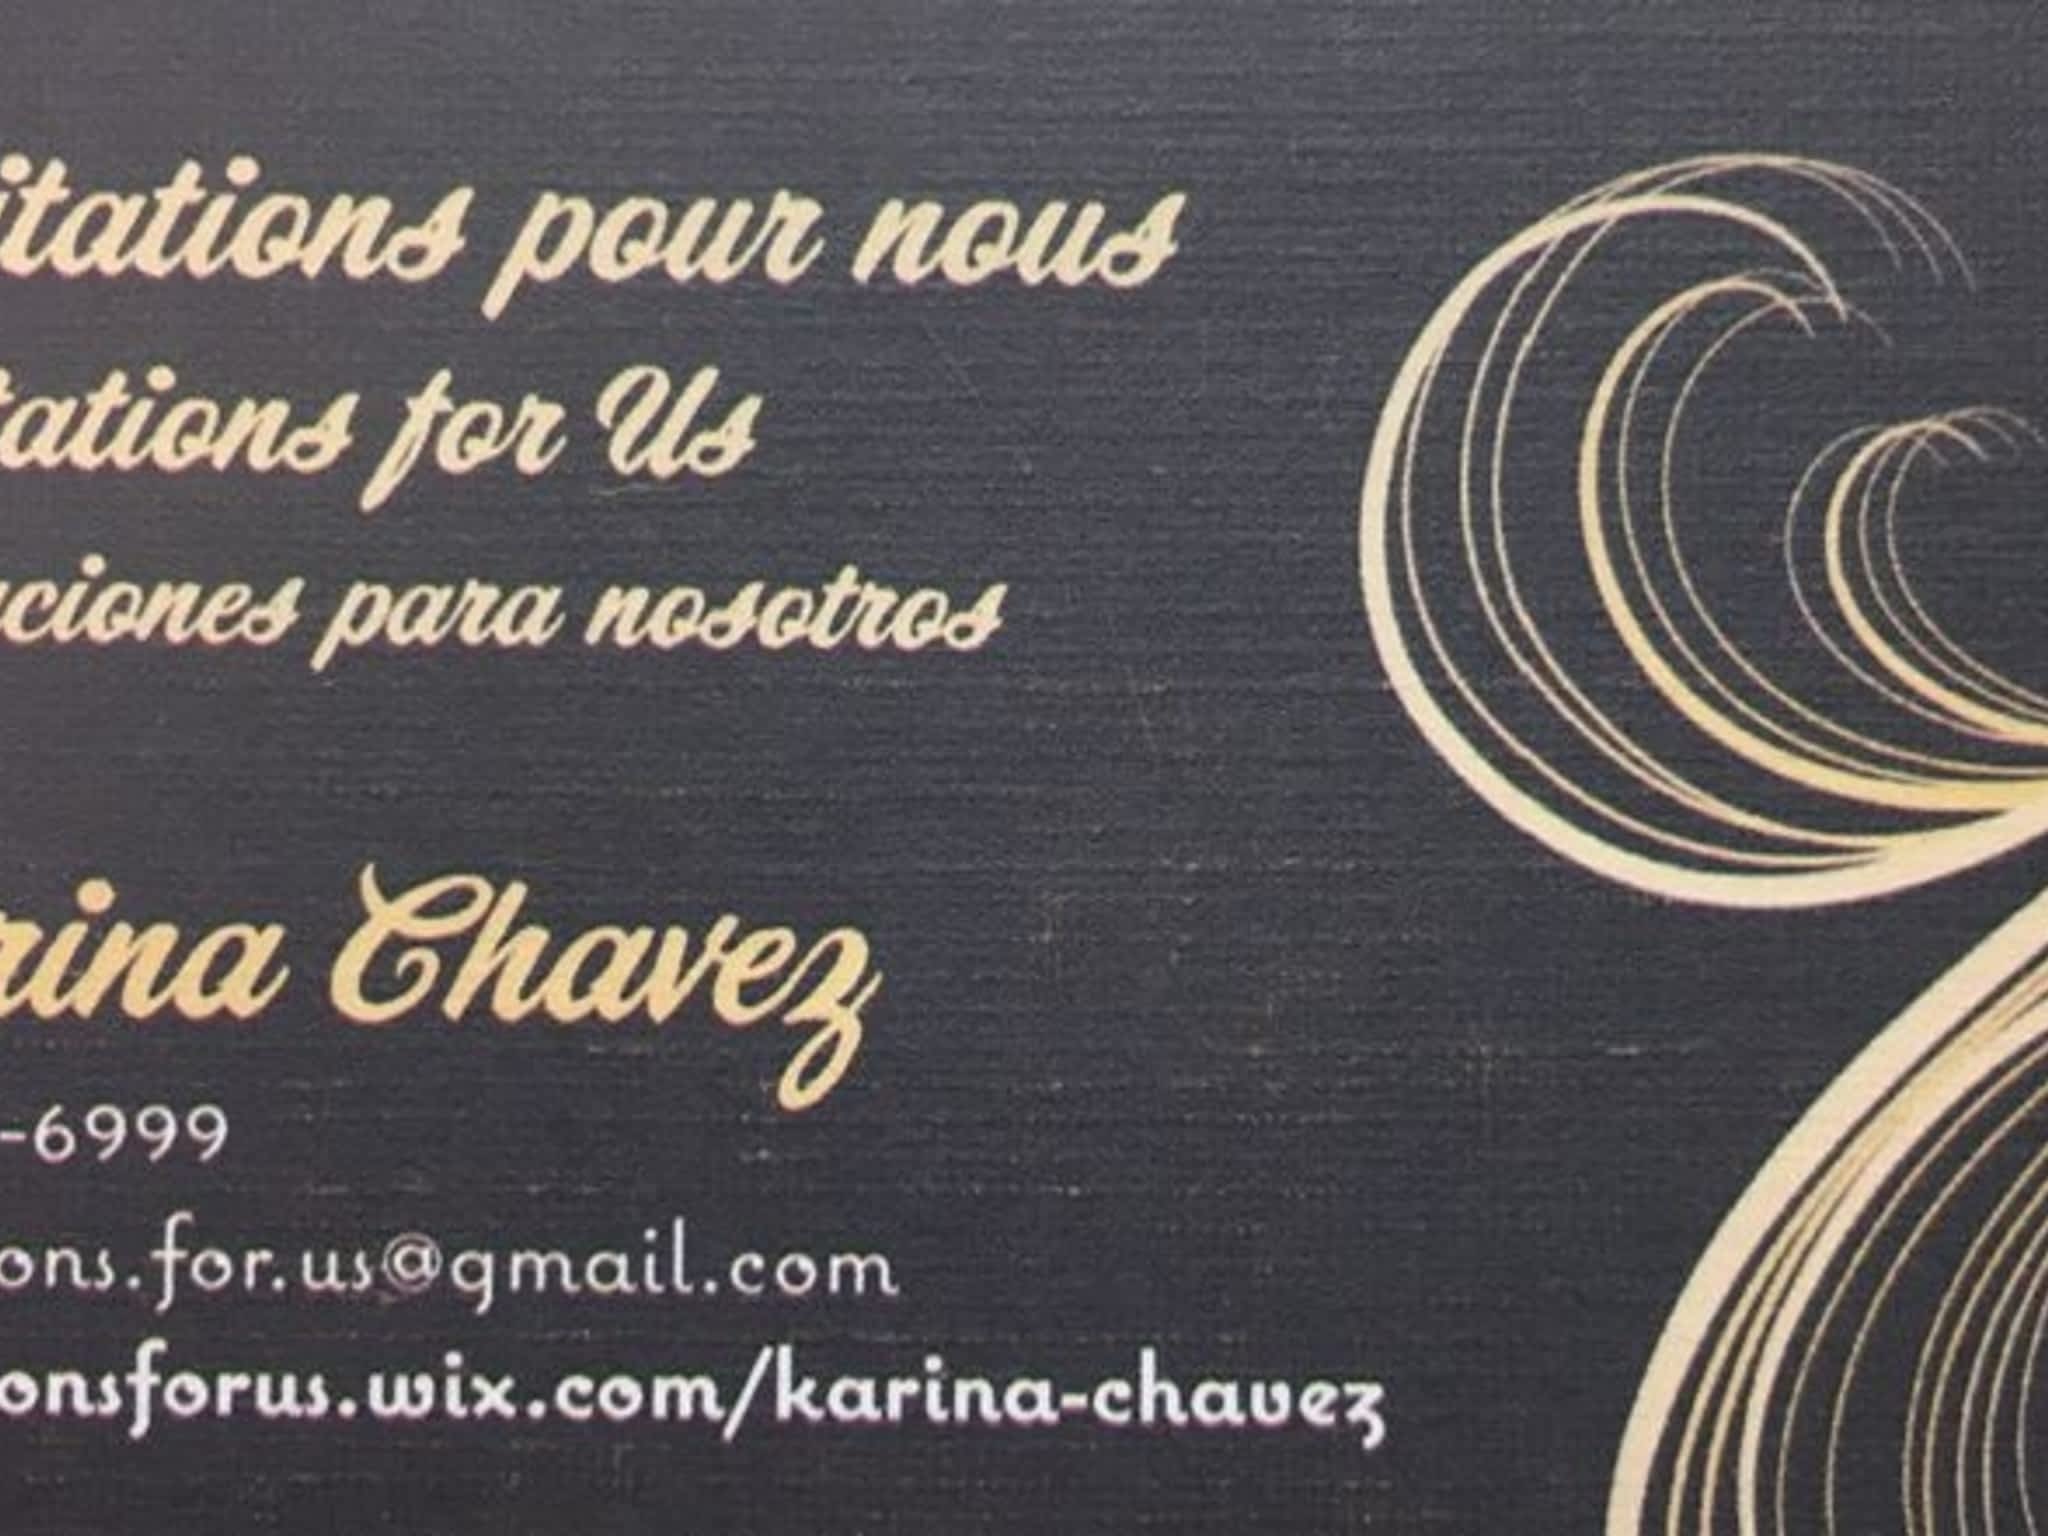 photo Invitation Pour Nous - Karina Chavez